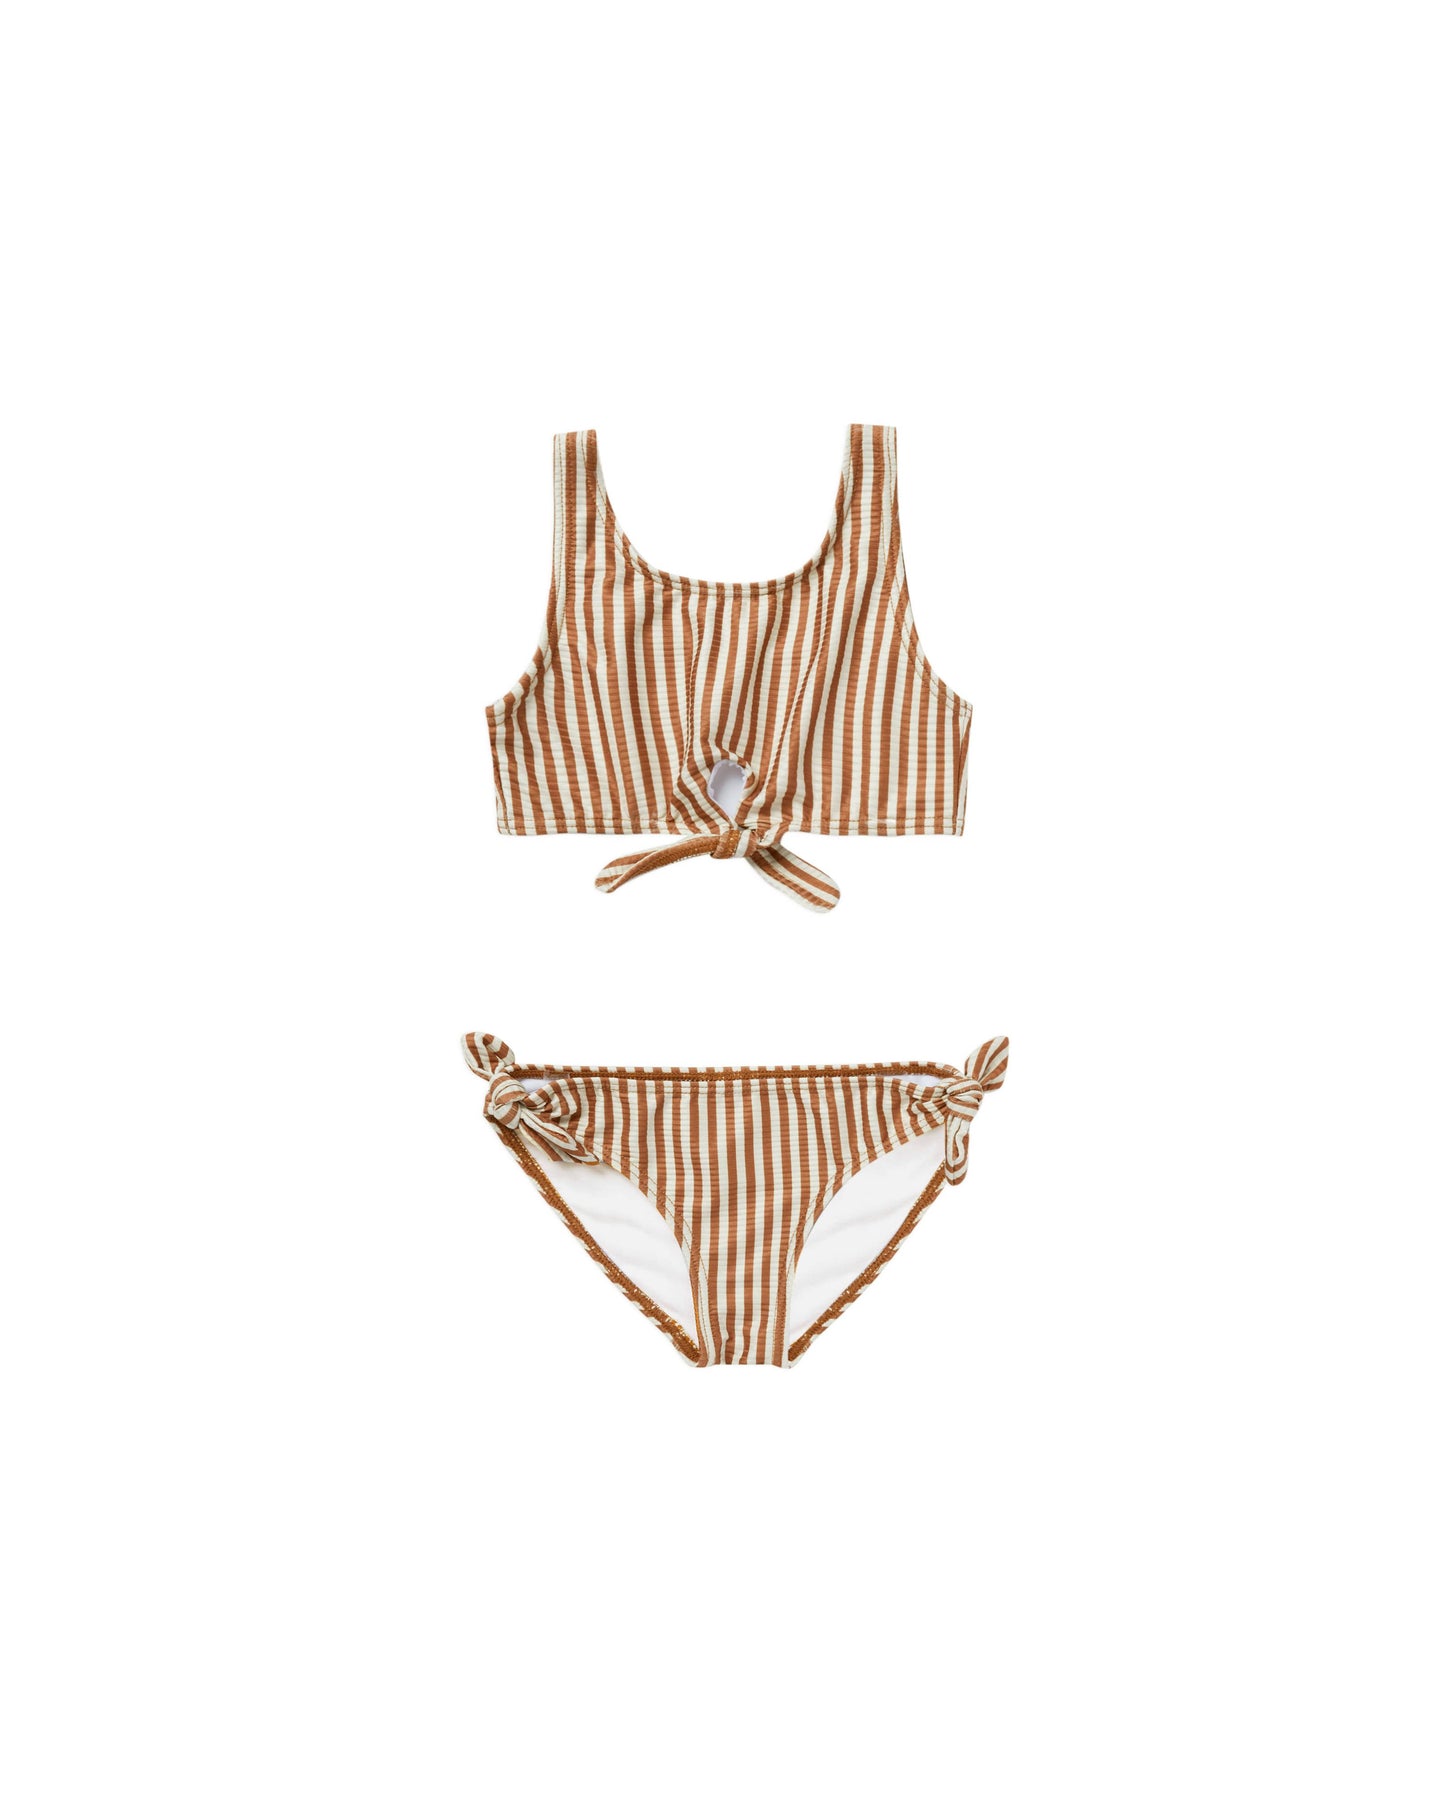 Rylee + Cru - Knotted Bikini - Rust Stripe - LAST ONE - 6-7Y